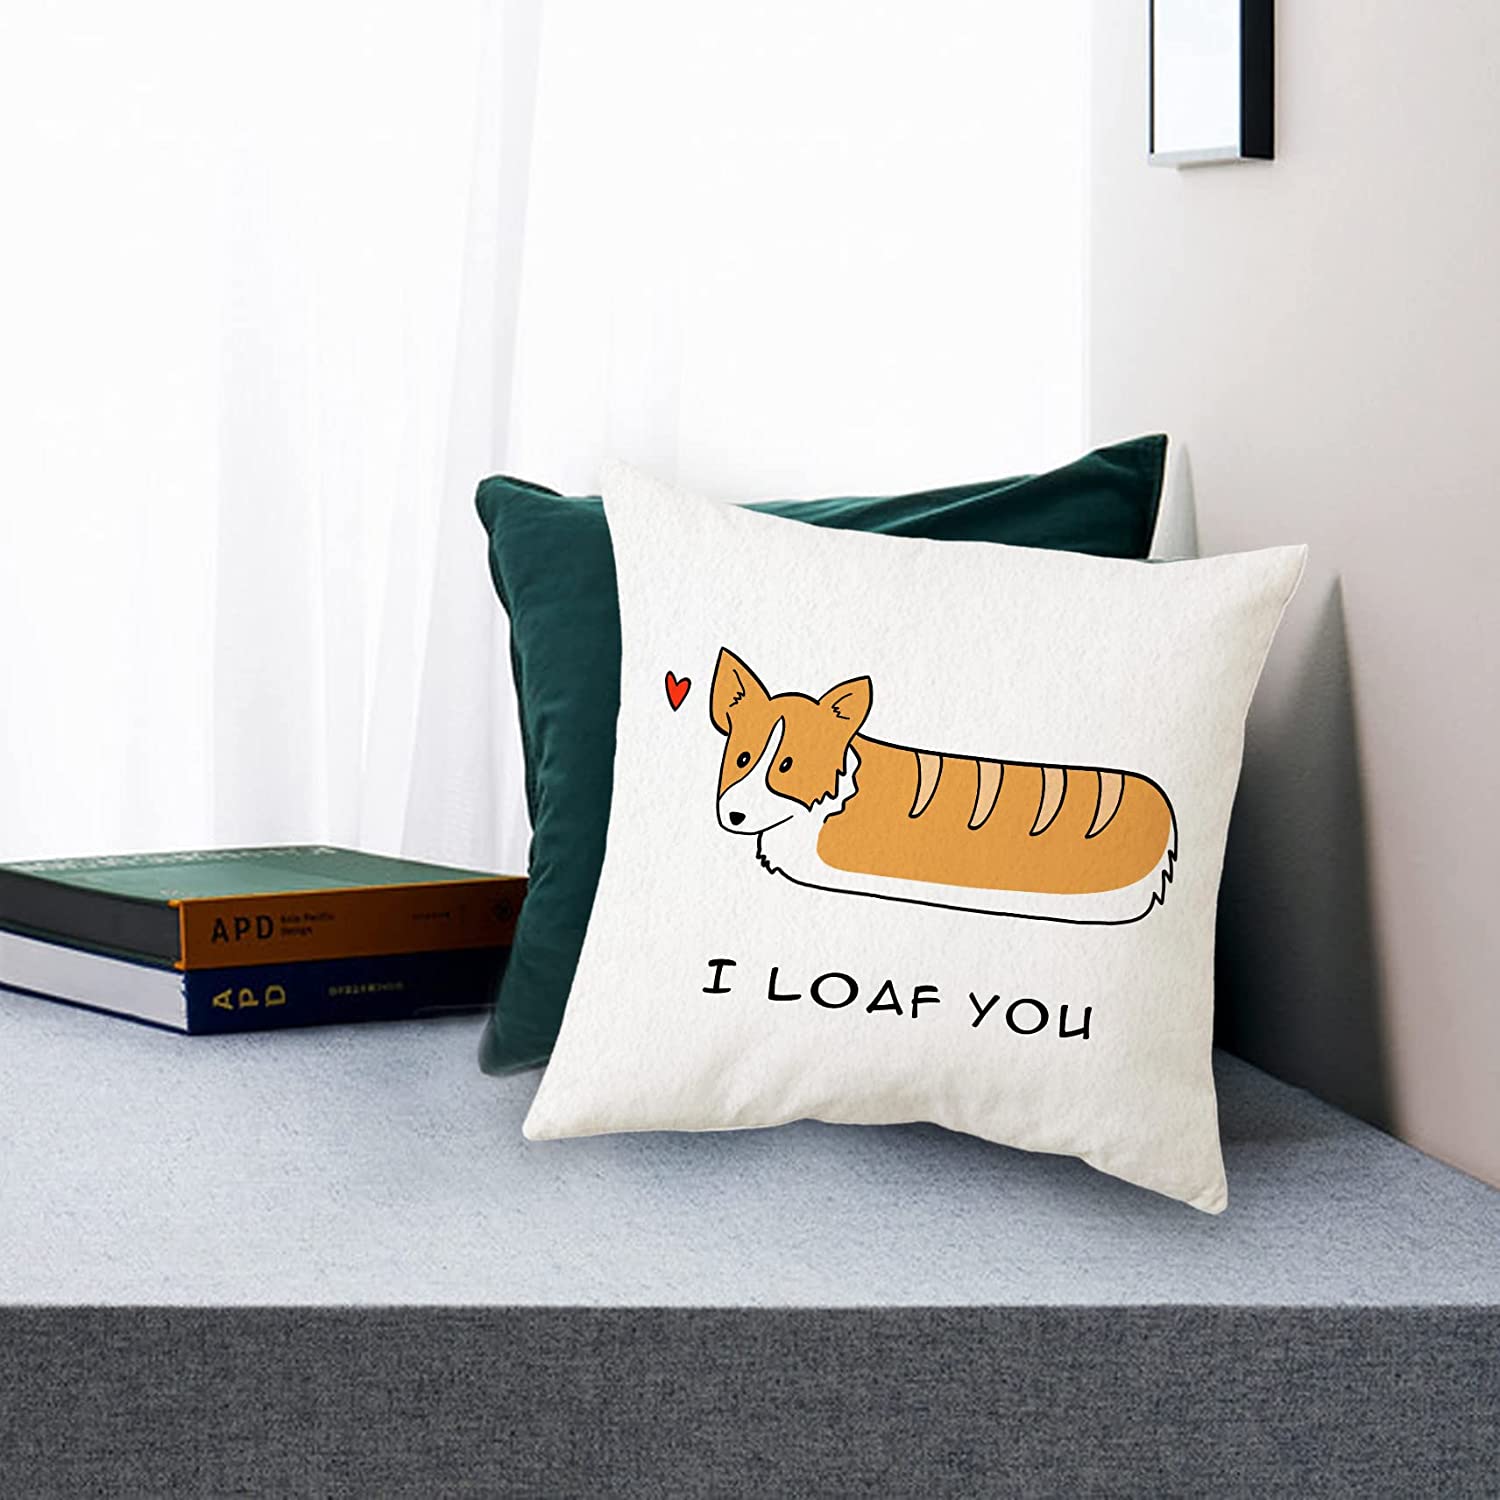 corgi-gift-pillow